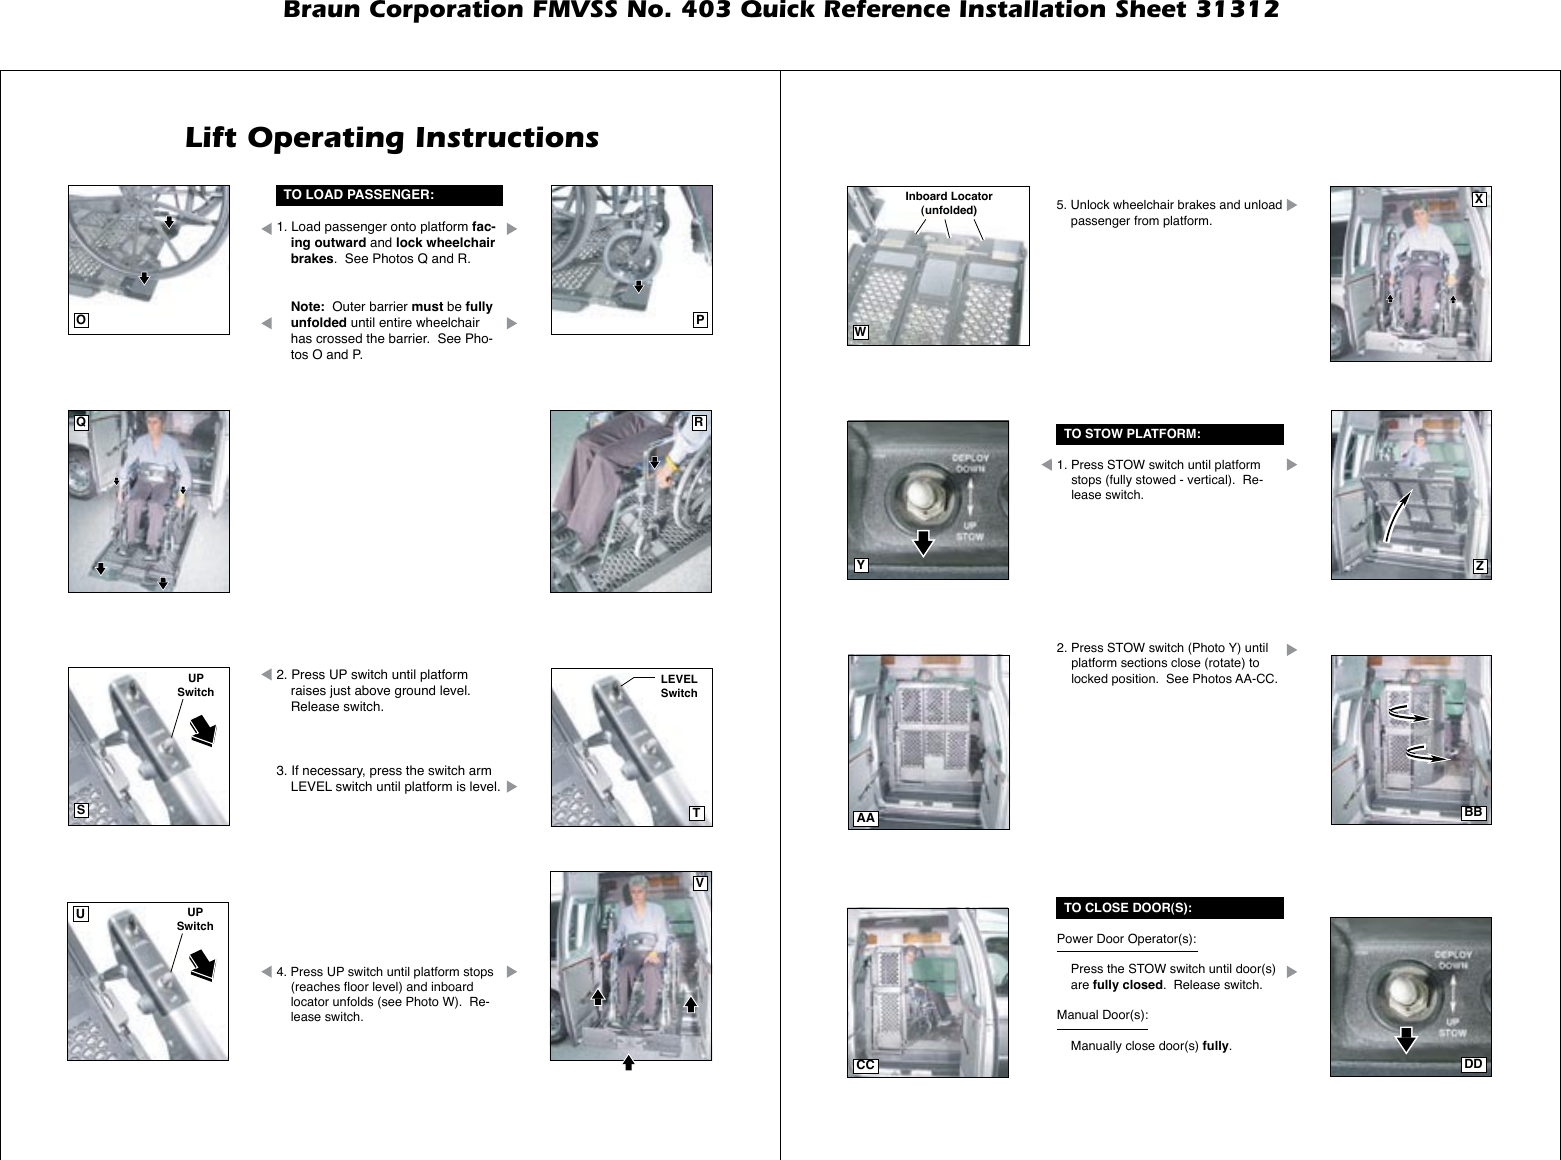 Page 6 of 8 - Braun Braun-Corporation-Fmvss-No-403-403-Users-Manual-  Braun-corporation-fmvss-no-403-403-users-manual